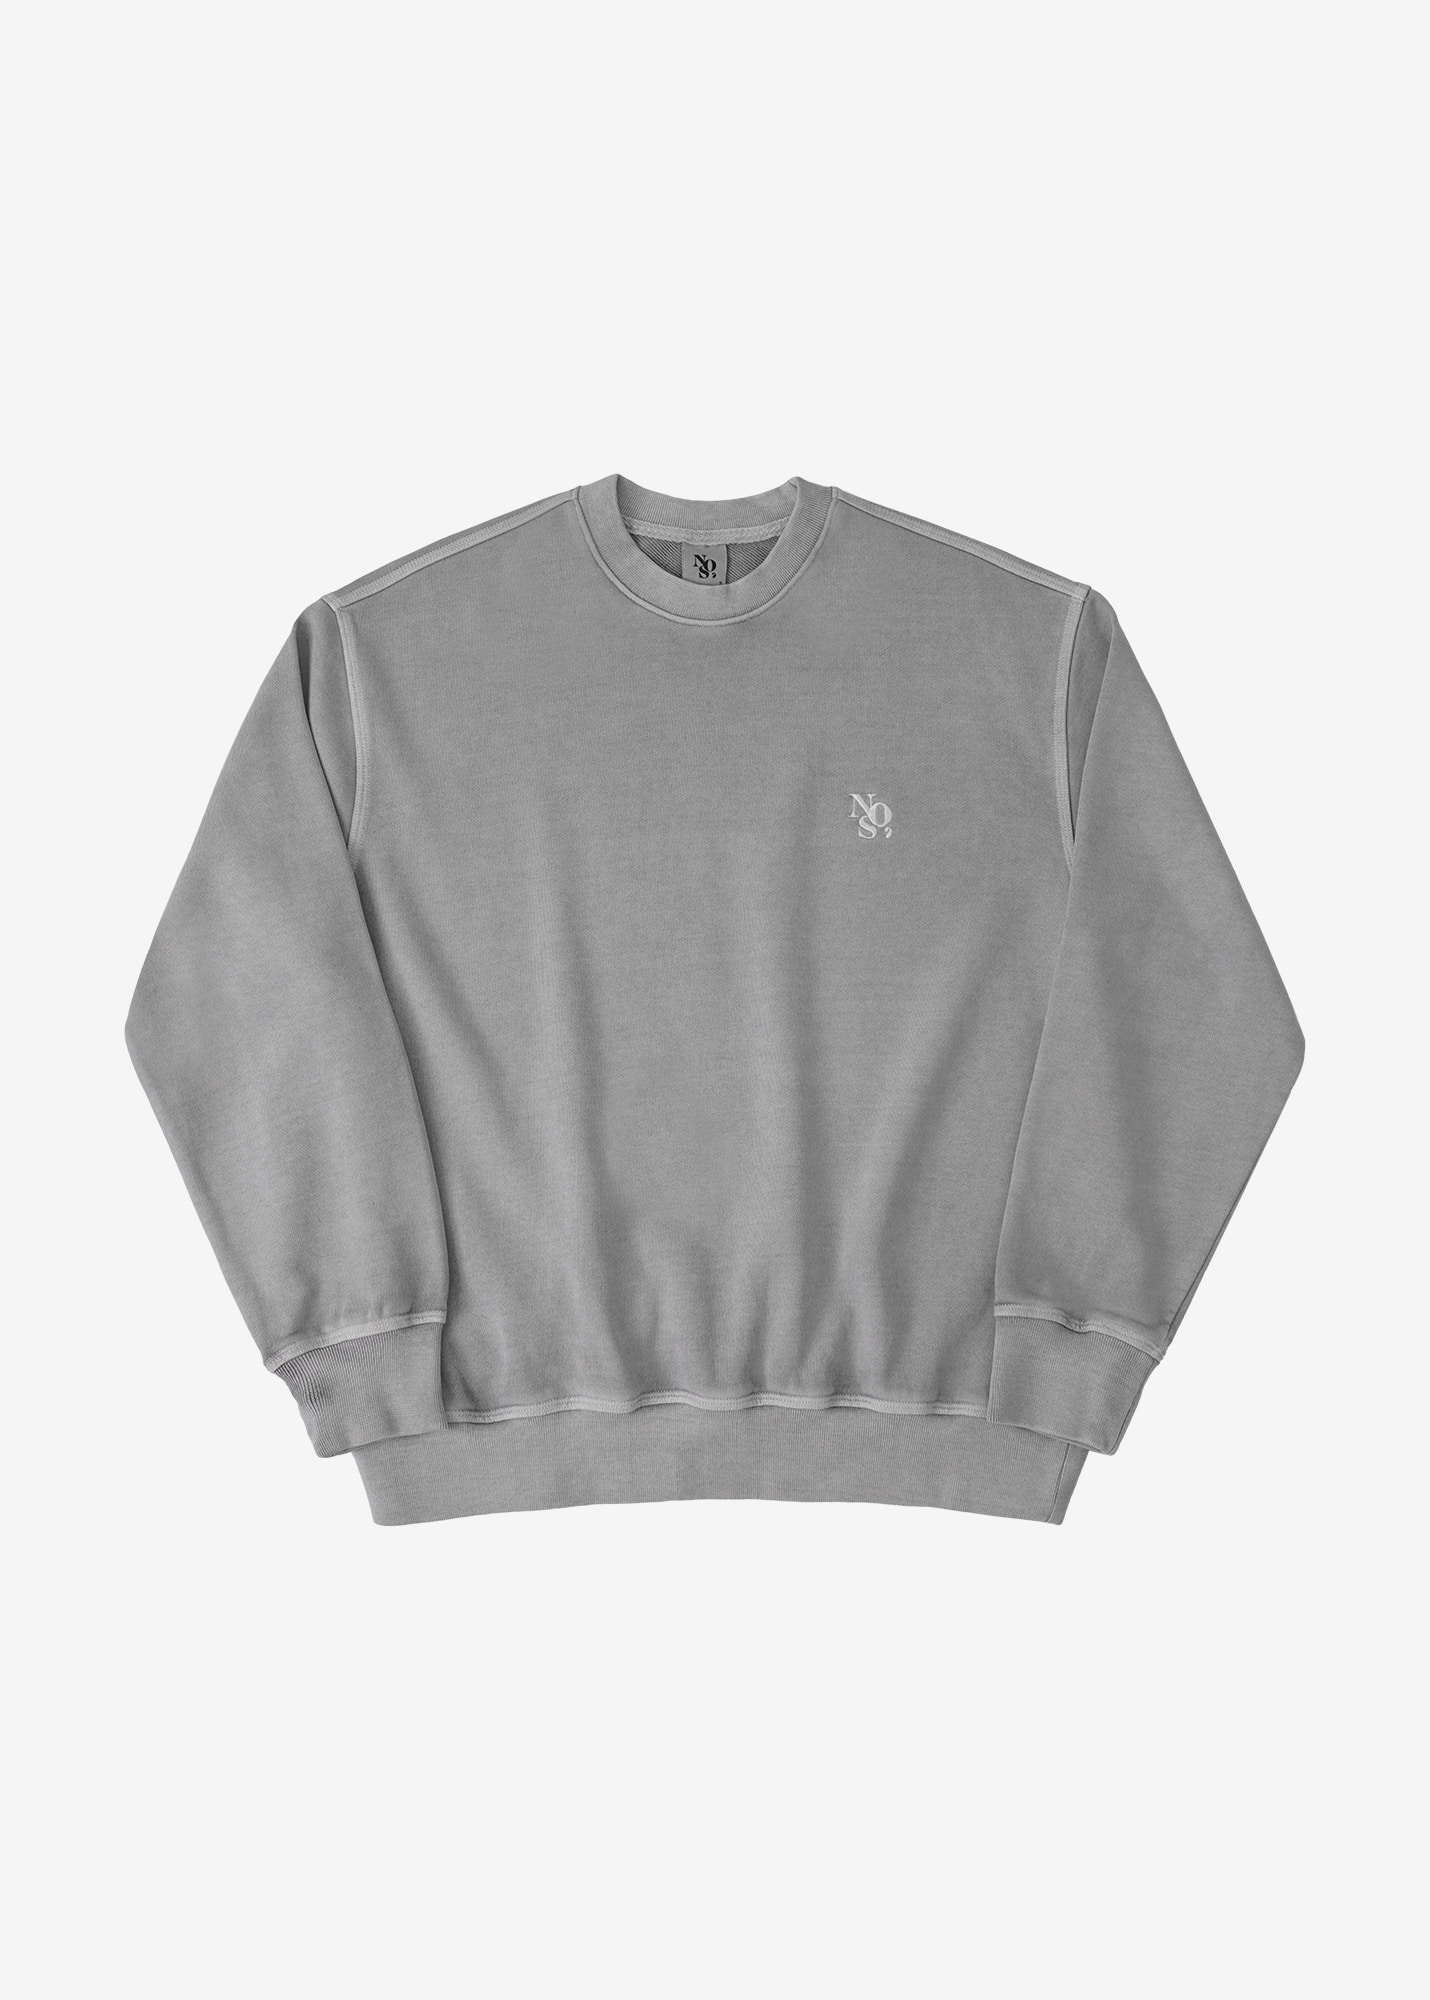 NOS7 Pigment Sweatshirt - Light Gray